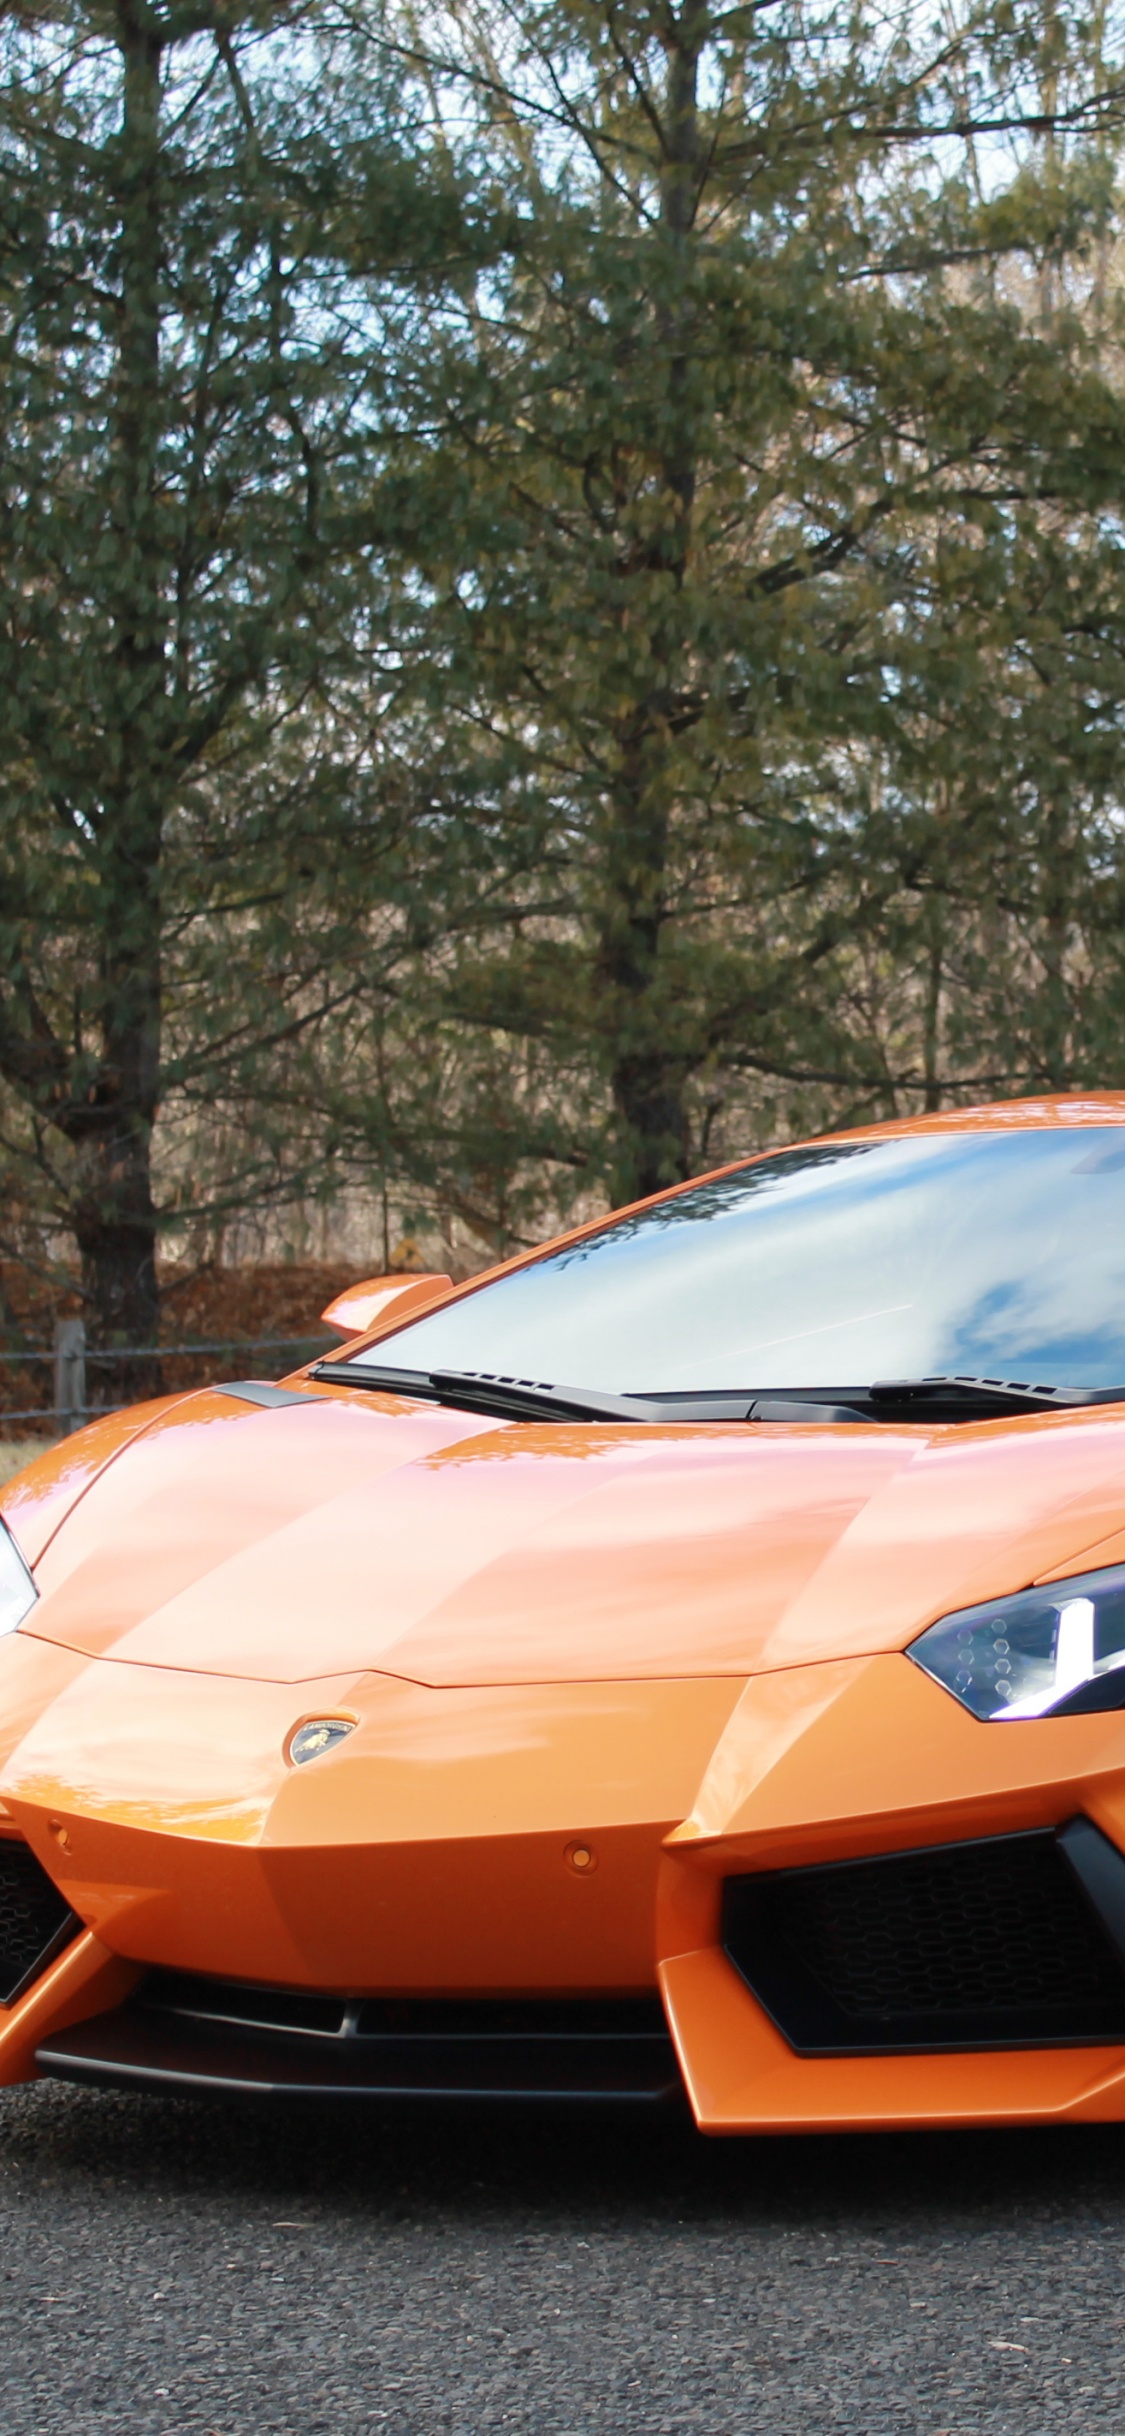 Orange Lamborghini Aventador Parked on Black Asphalt Road During Daytime. Wallpaper in 1125x2436 Resolution